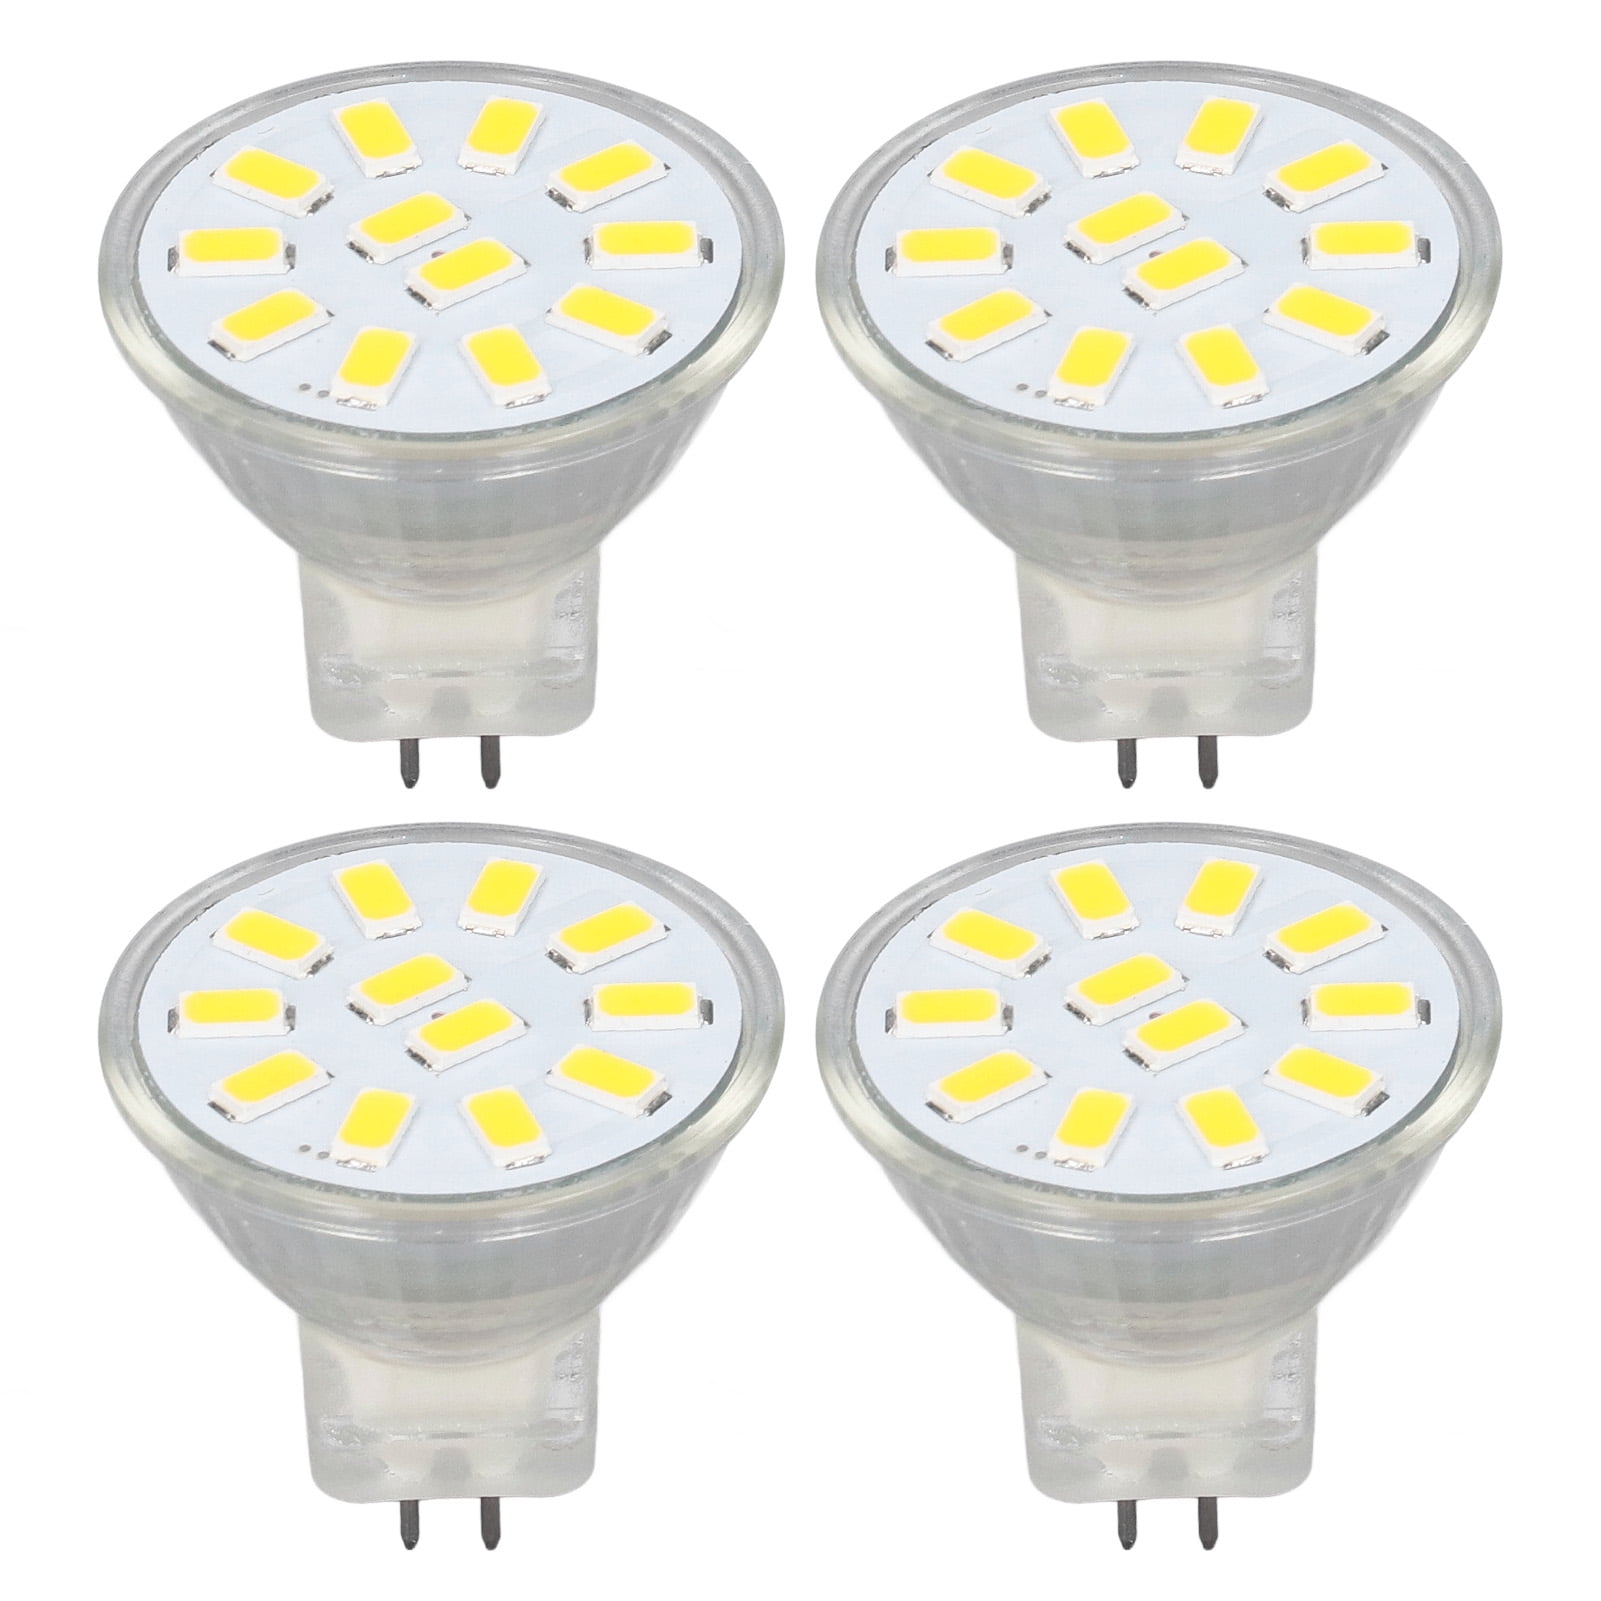 MR11 LED Light Bulb, MR11 Lamp Bulb 50000 Hours Service Time For For Outdoor Cold White - Walmart.com